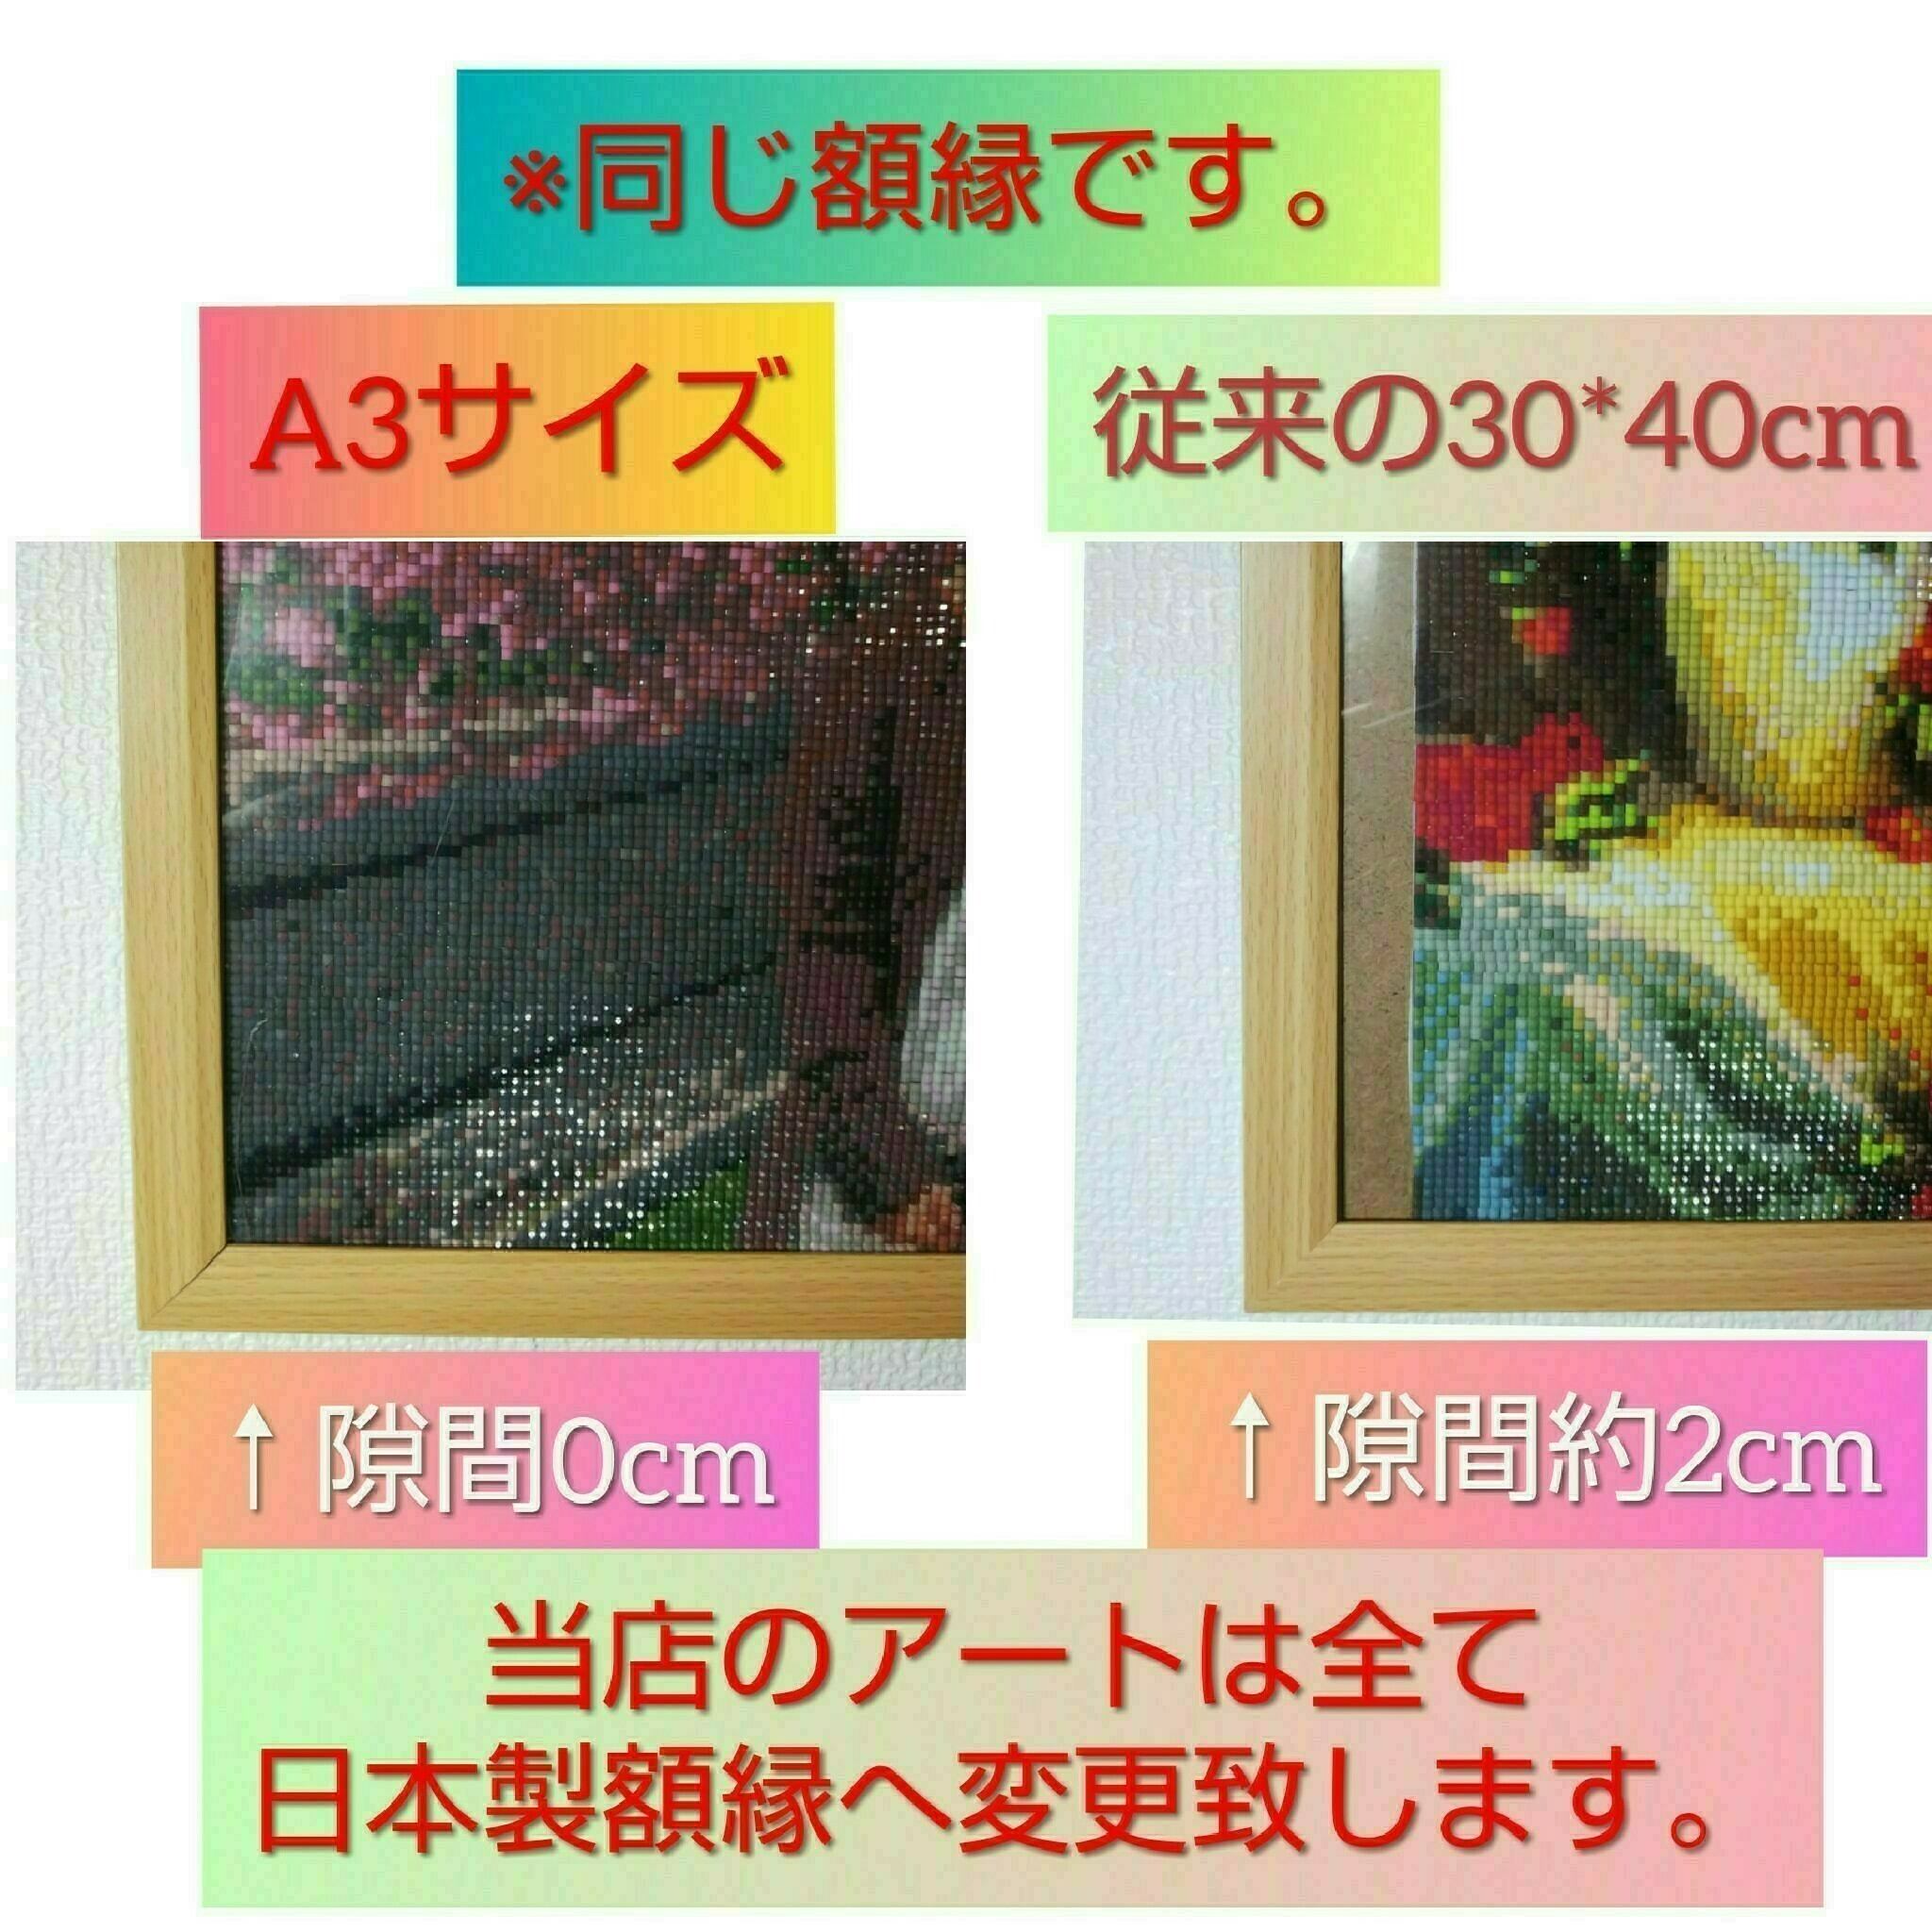 A3サイズ 四角ビーズ【runa-520】ダイヤモンドアート